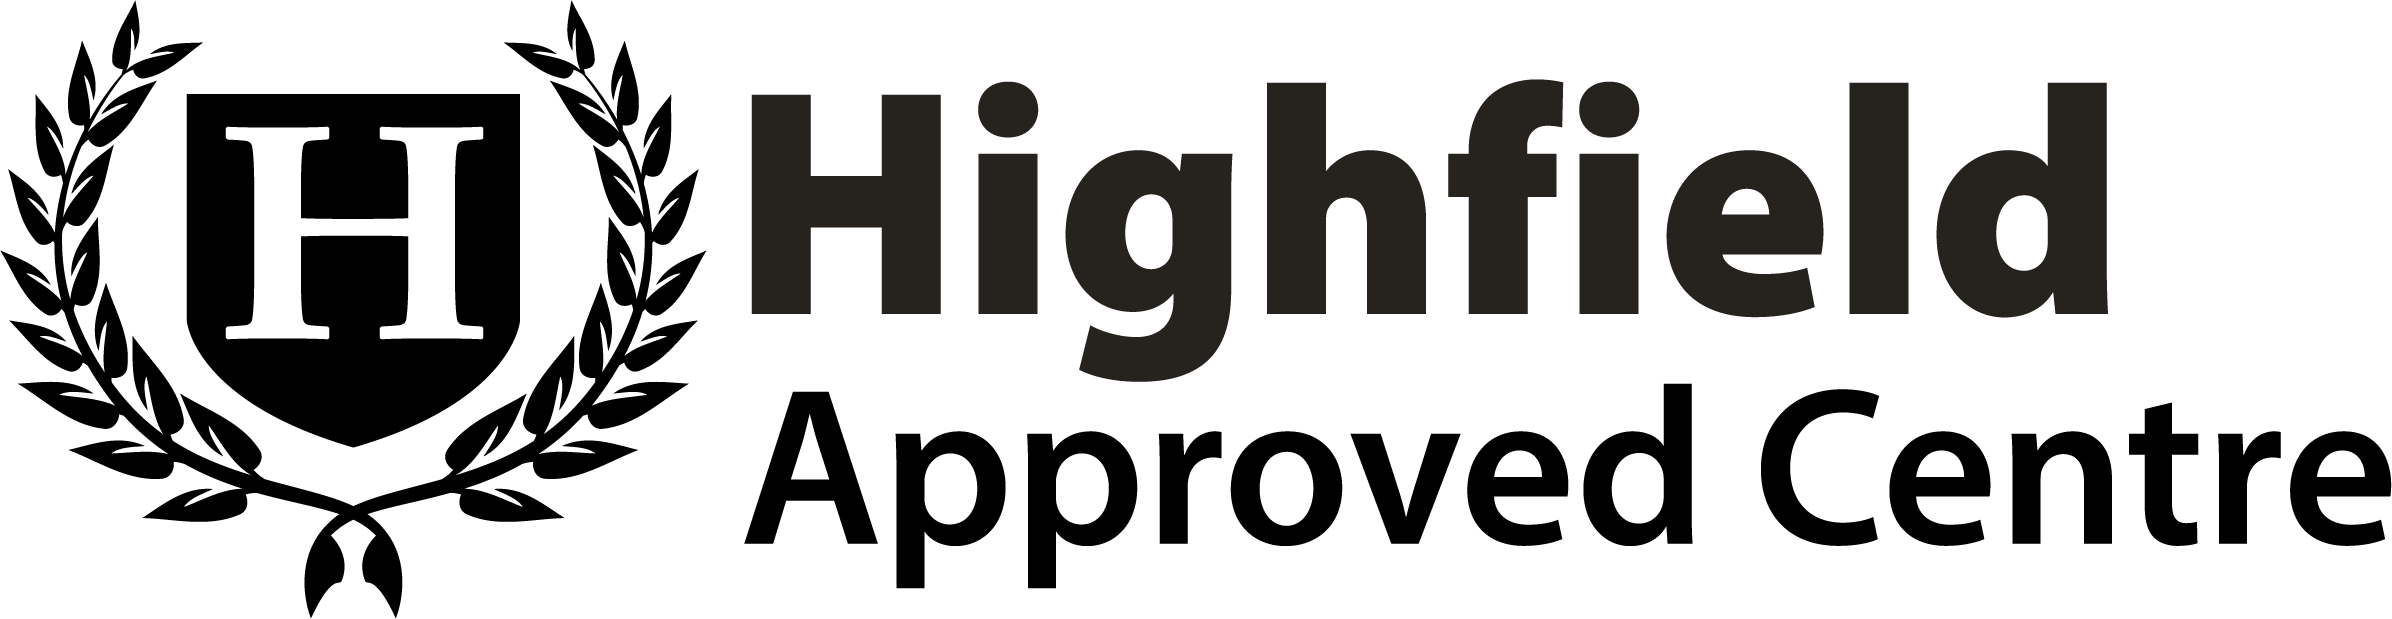 Highfield Logo